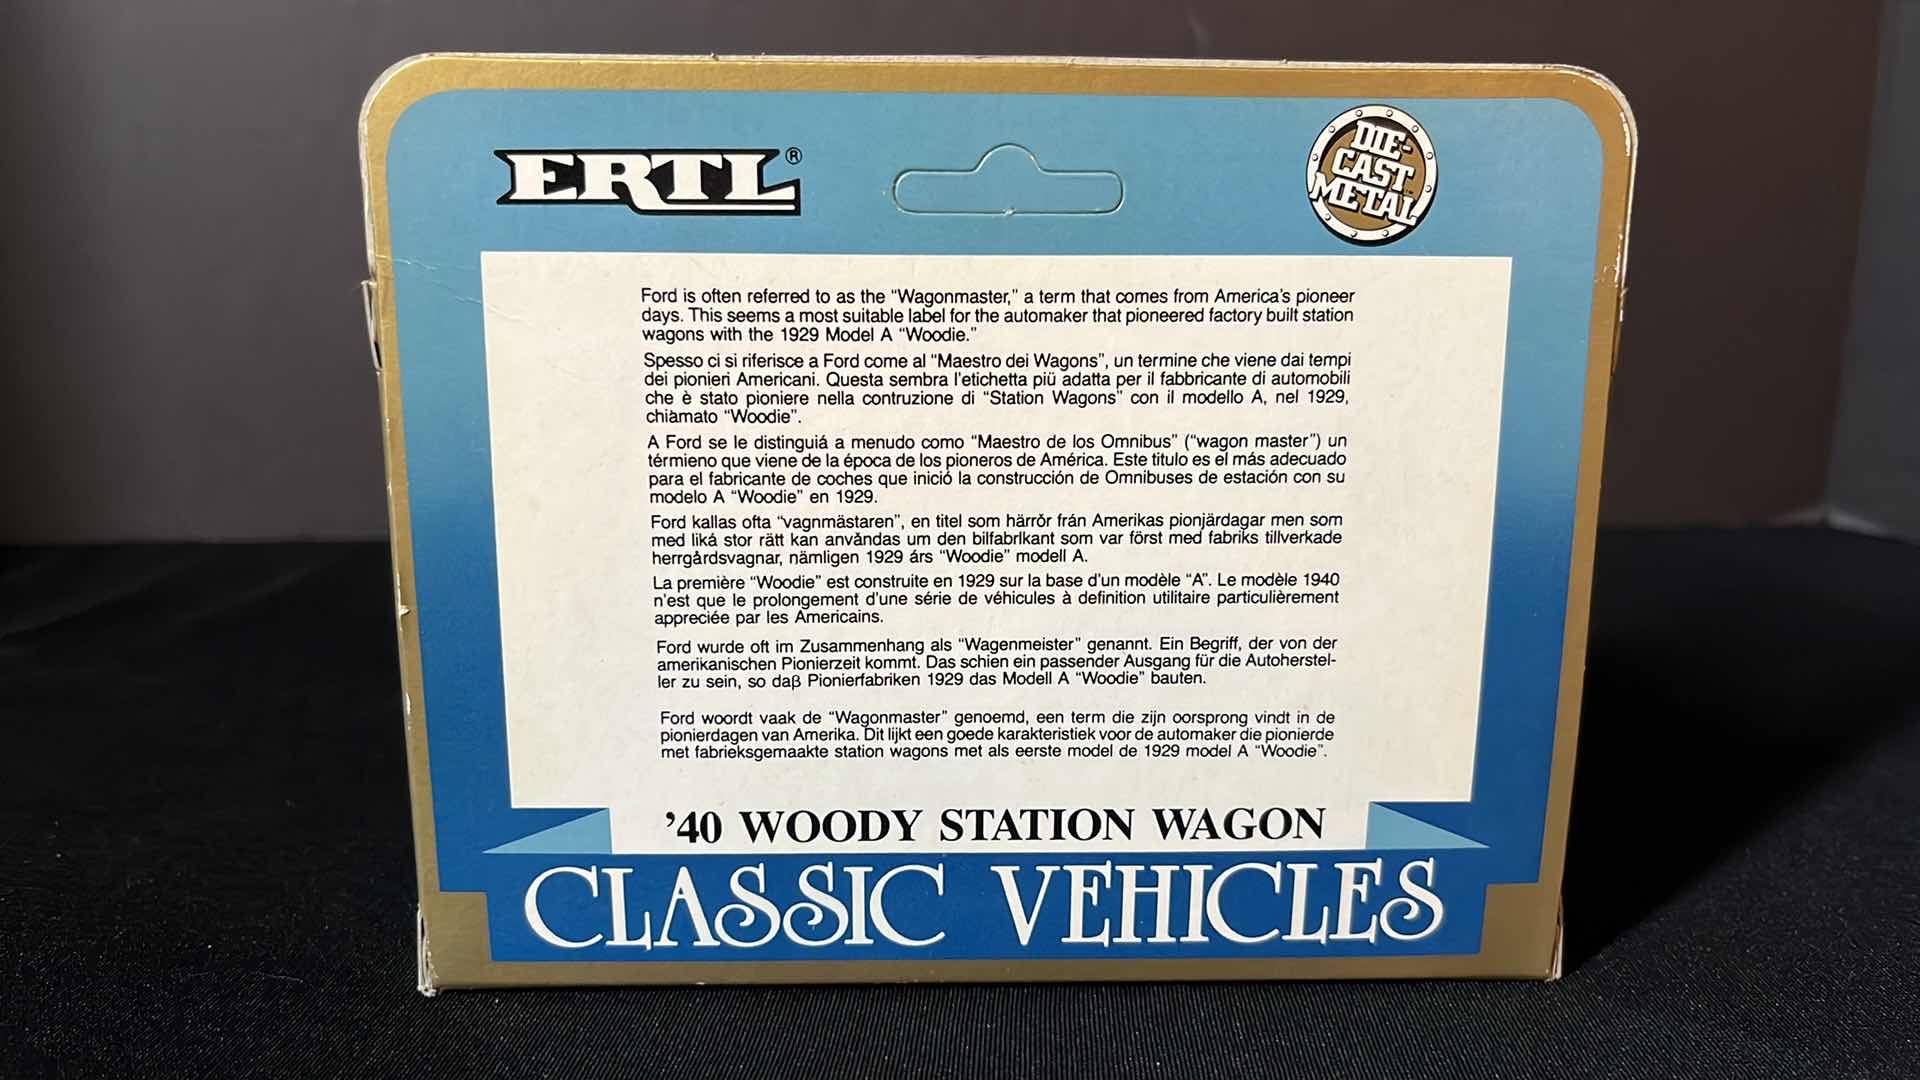 Photo 5 of VINTAGE ERTL DIE-CAST METAL CLASSIC VEHICLES 40’ WOODY STATION WAGON 1990 (#2517)